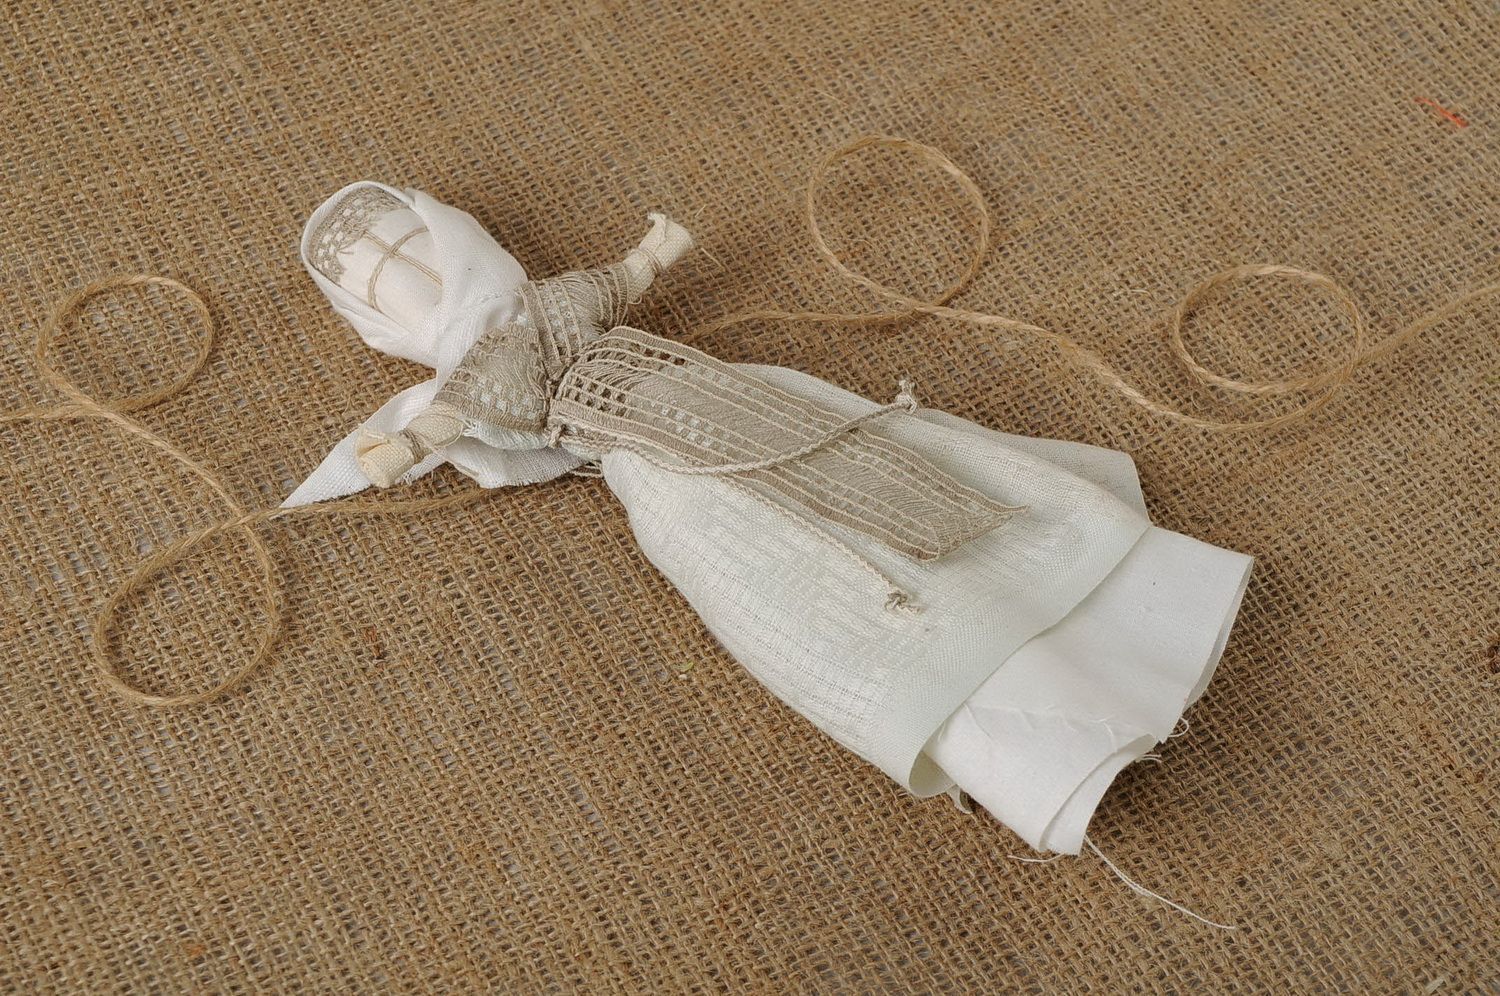 Motanka-poupée ethnique en tissu faite main photo 1